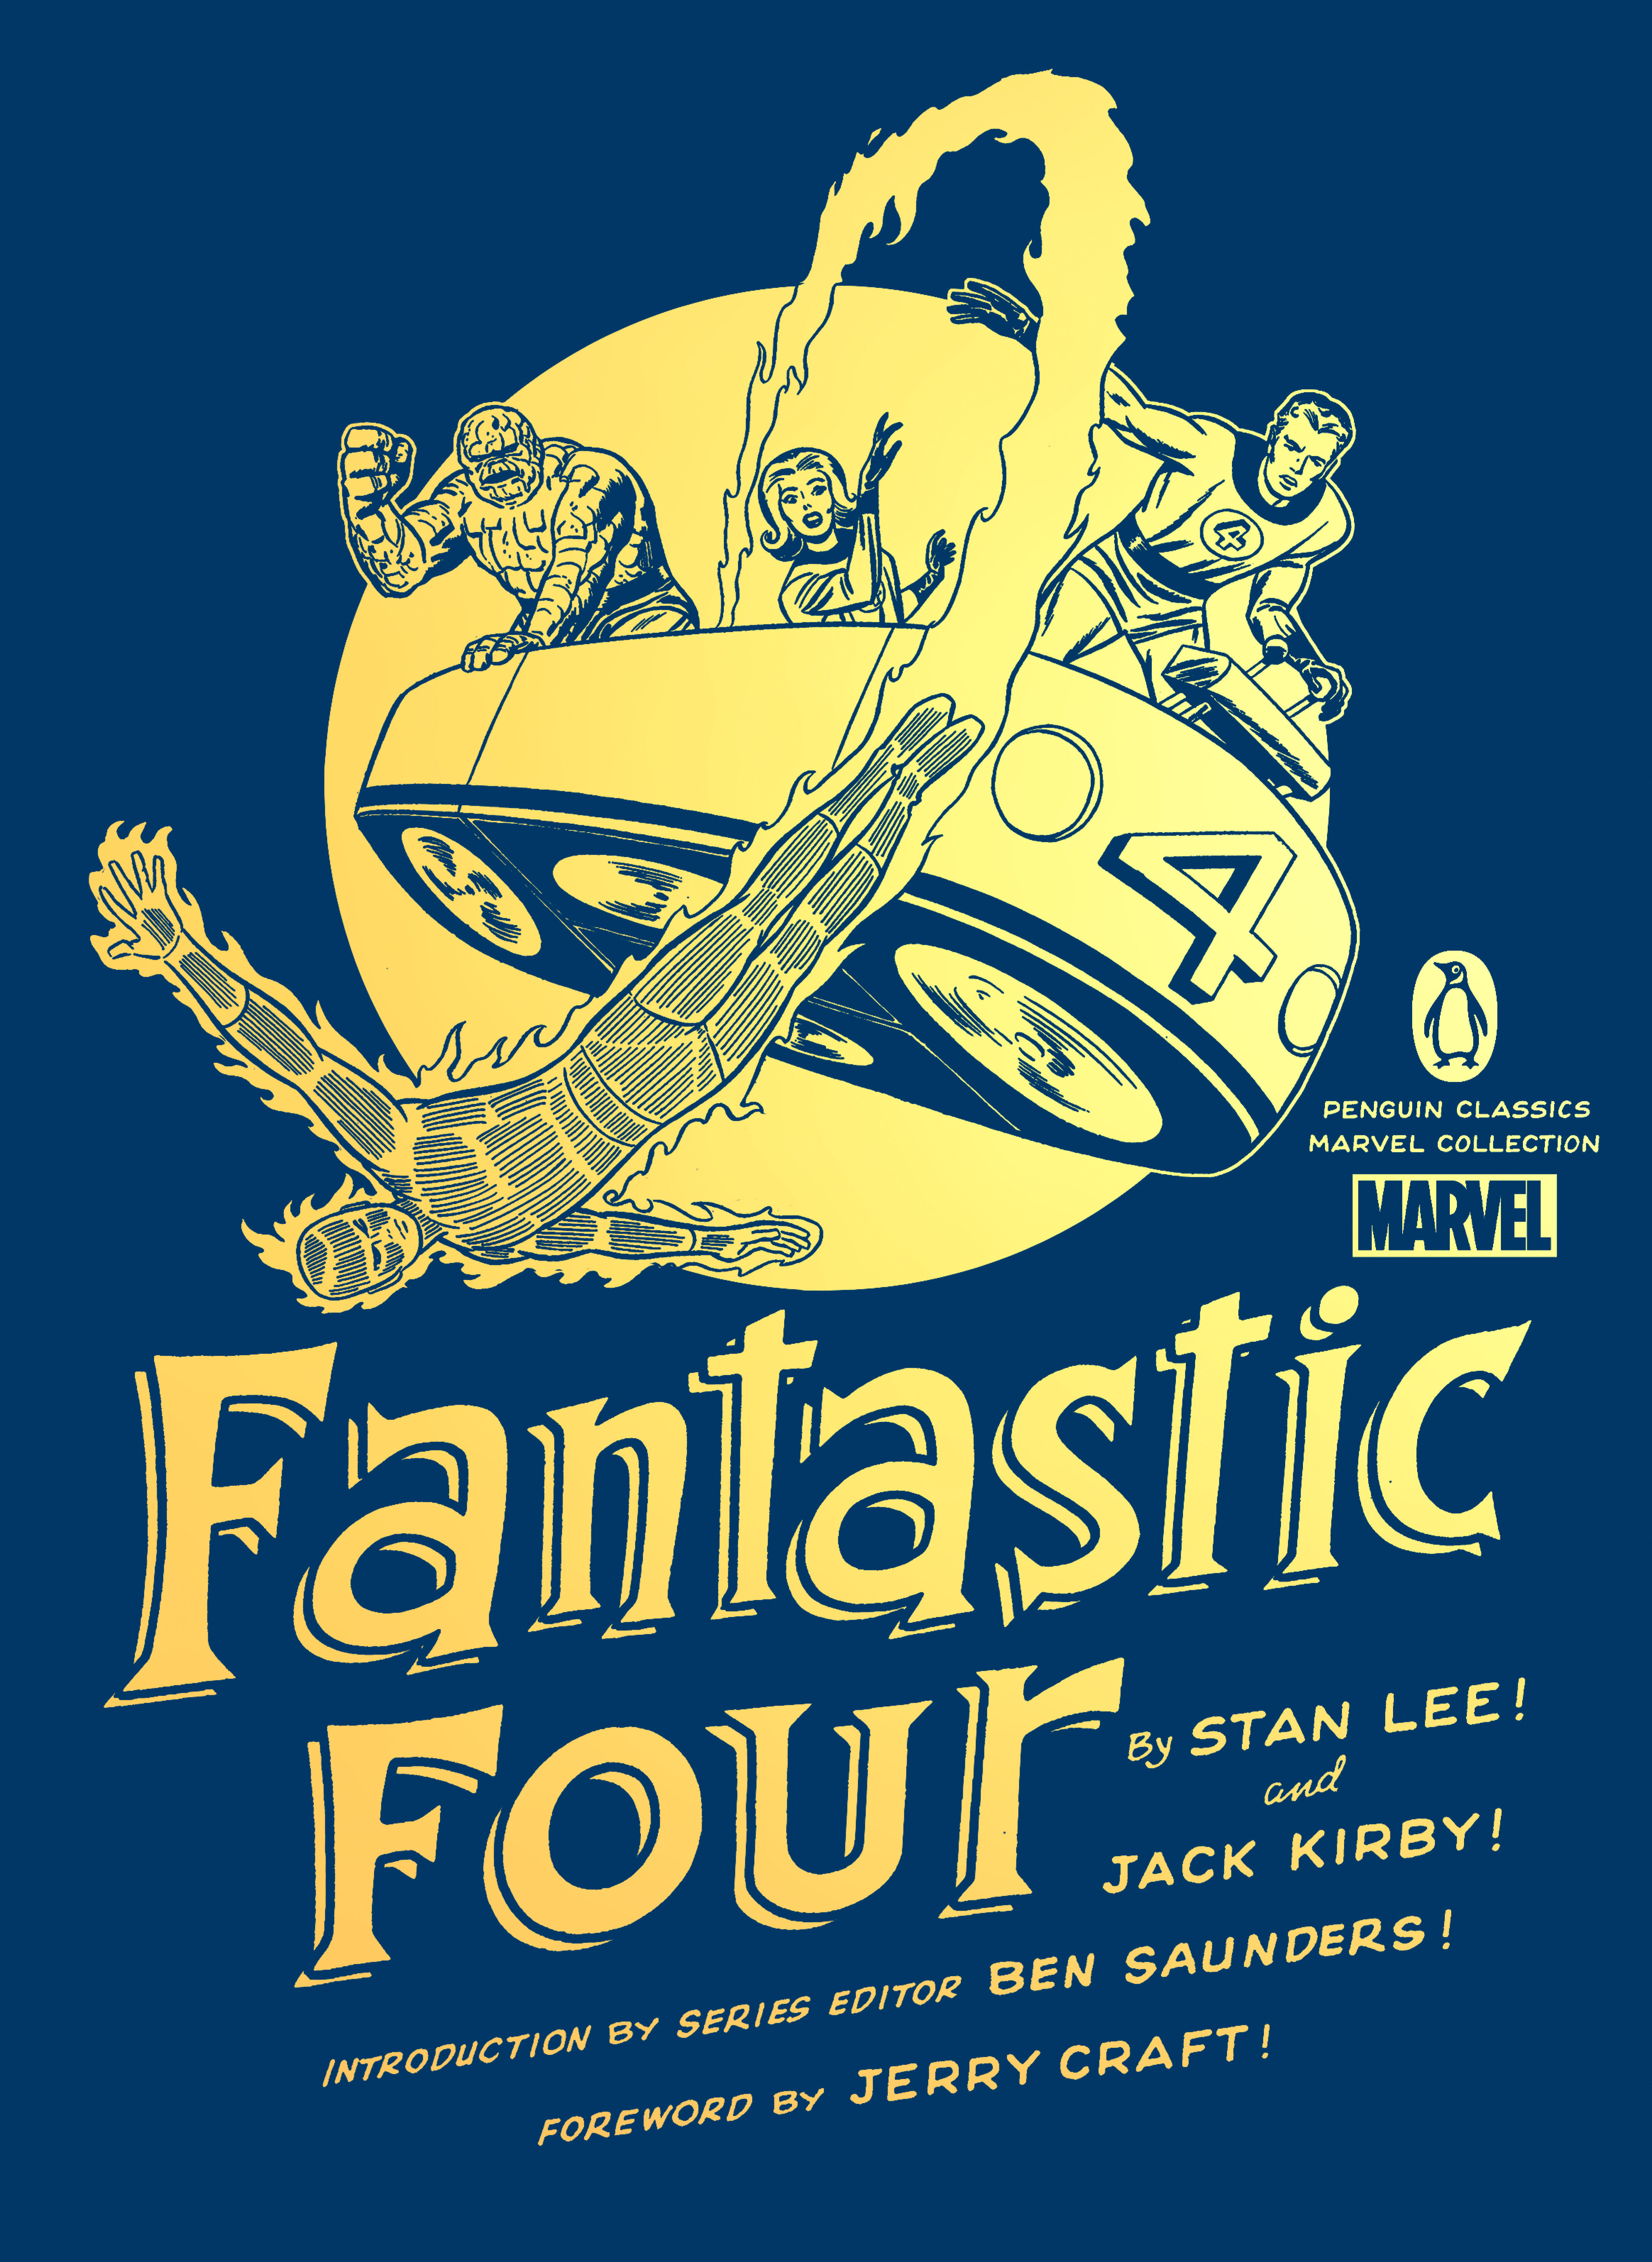 Penguin Classics Marvel Collection Hardcover Volume 6 Fantastic Four